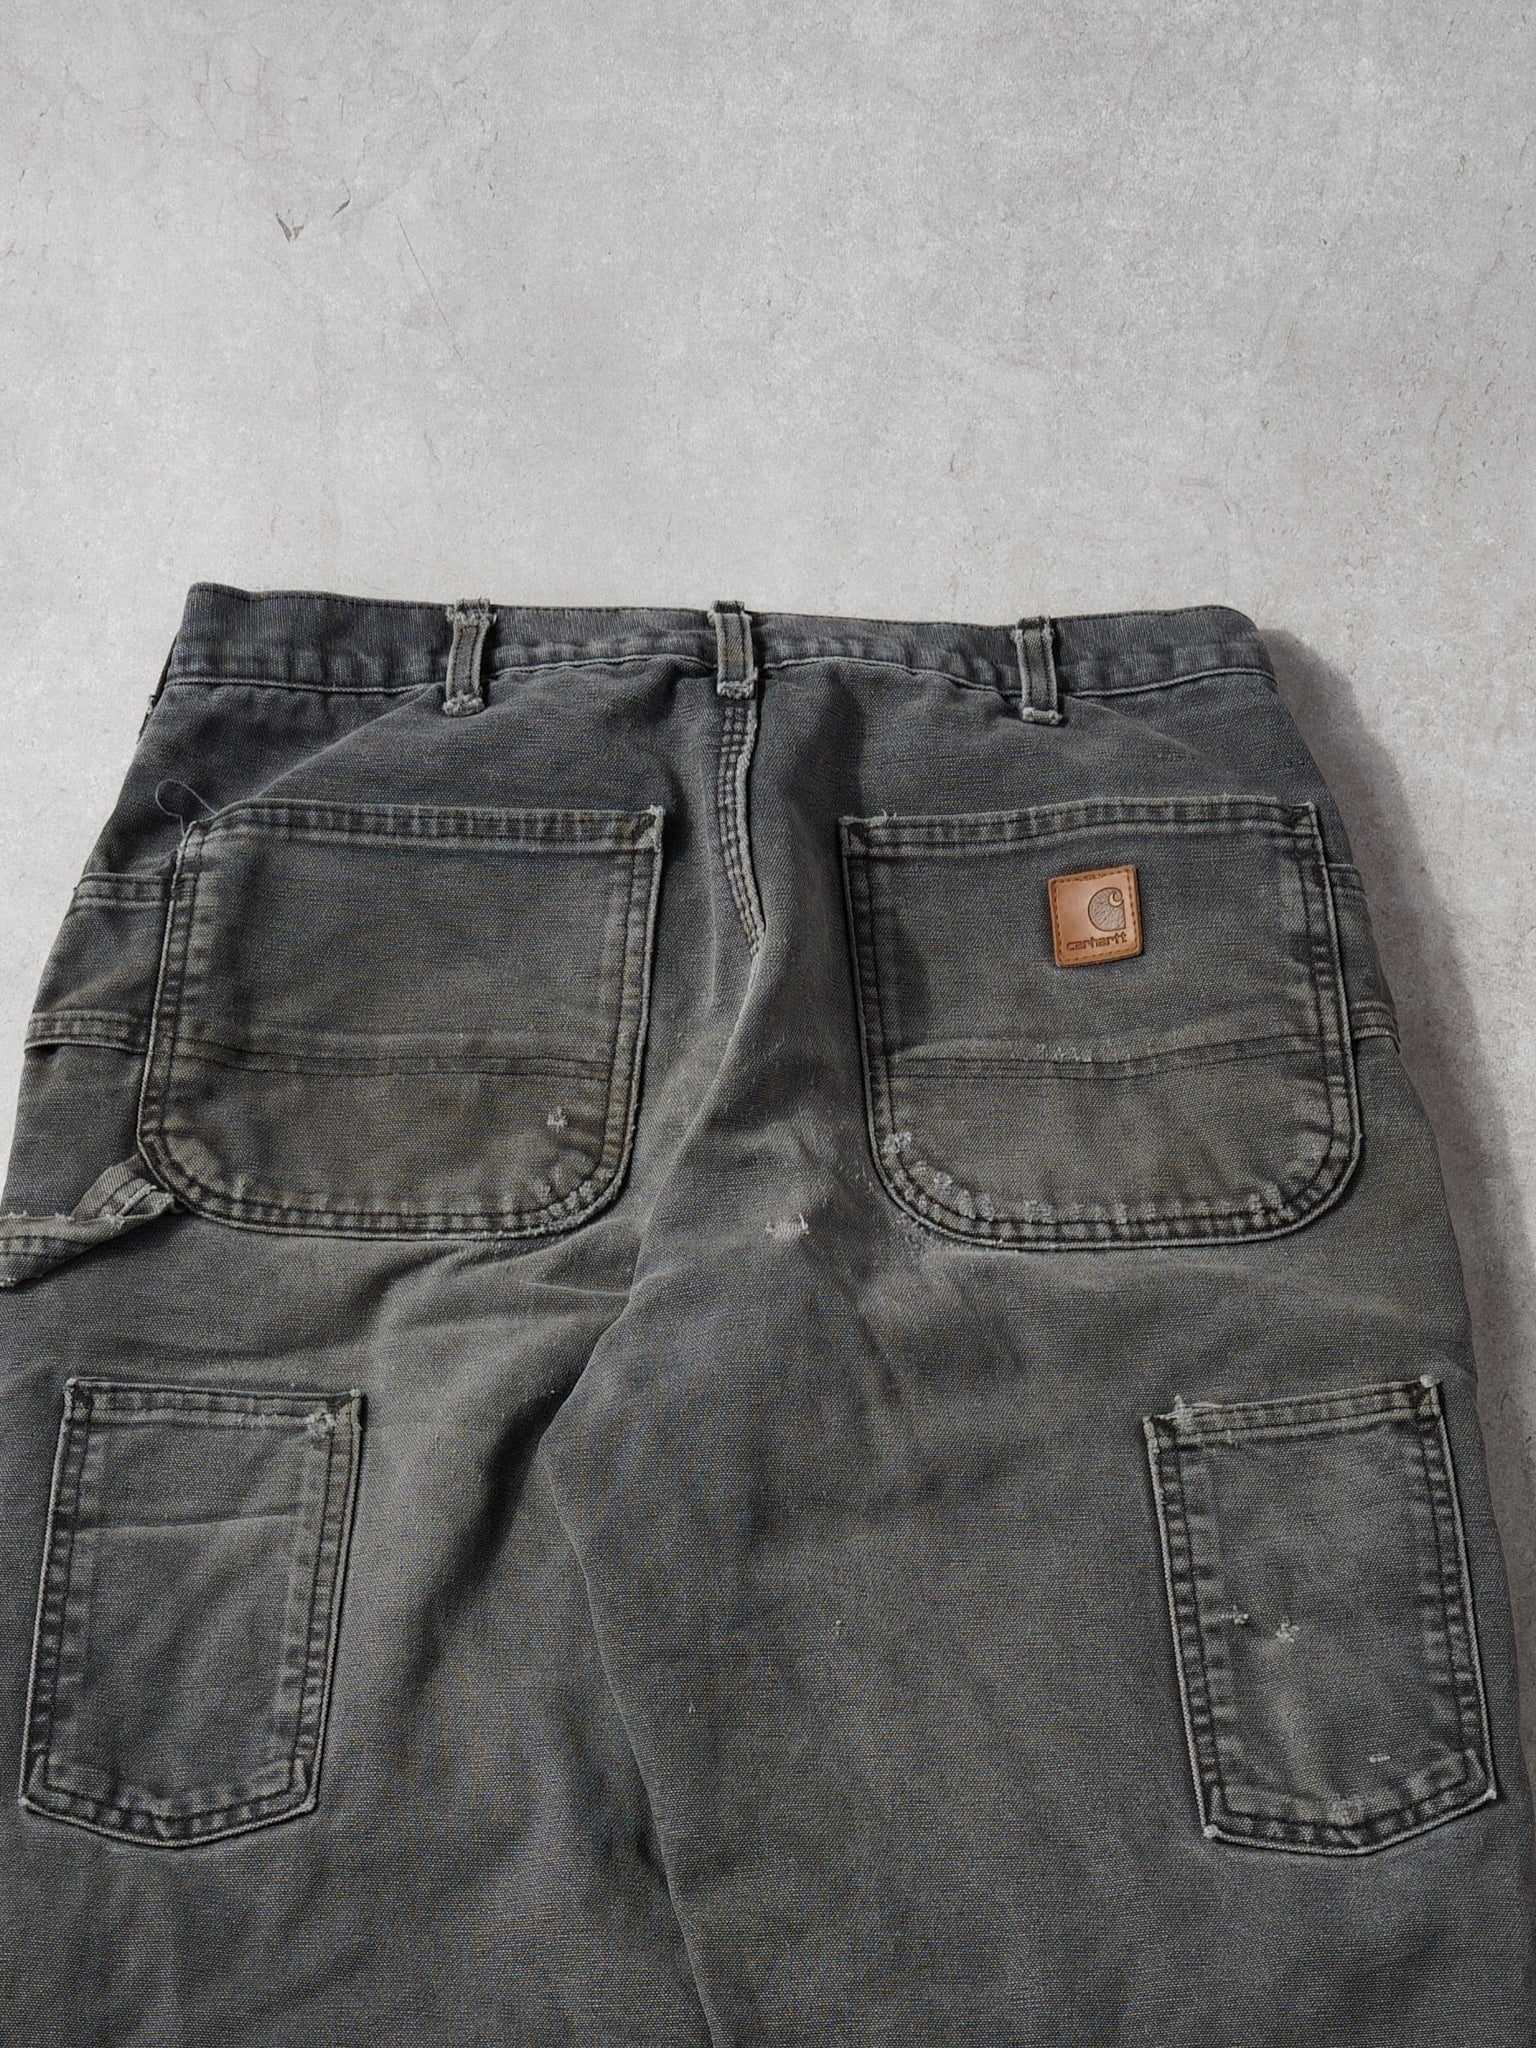 Vintage 90s Grey Carhartt Double Knee Carpenter Lined Pants (31x31)